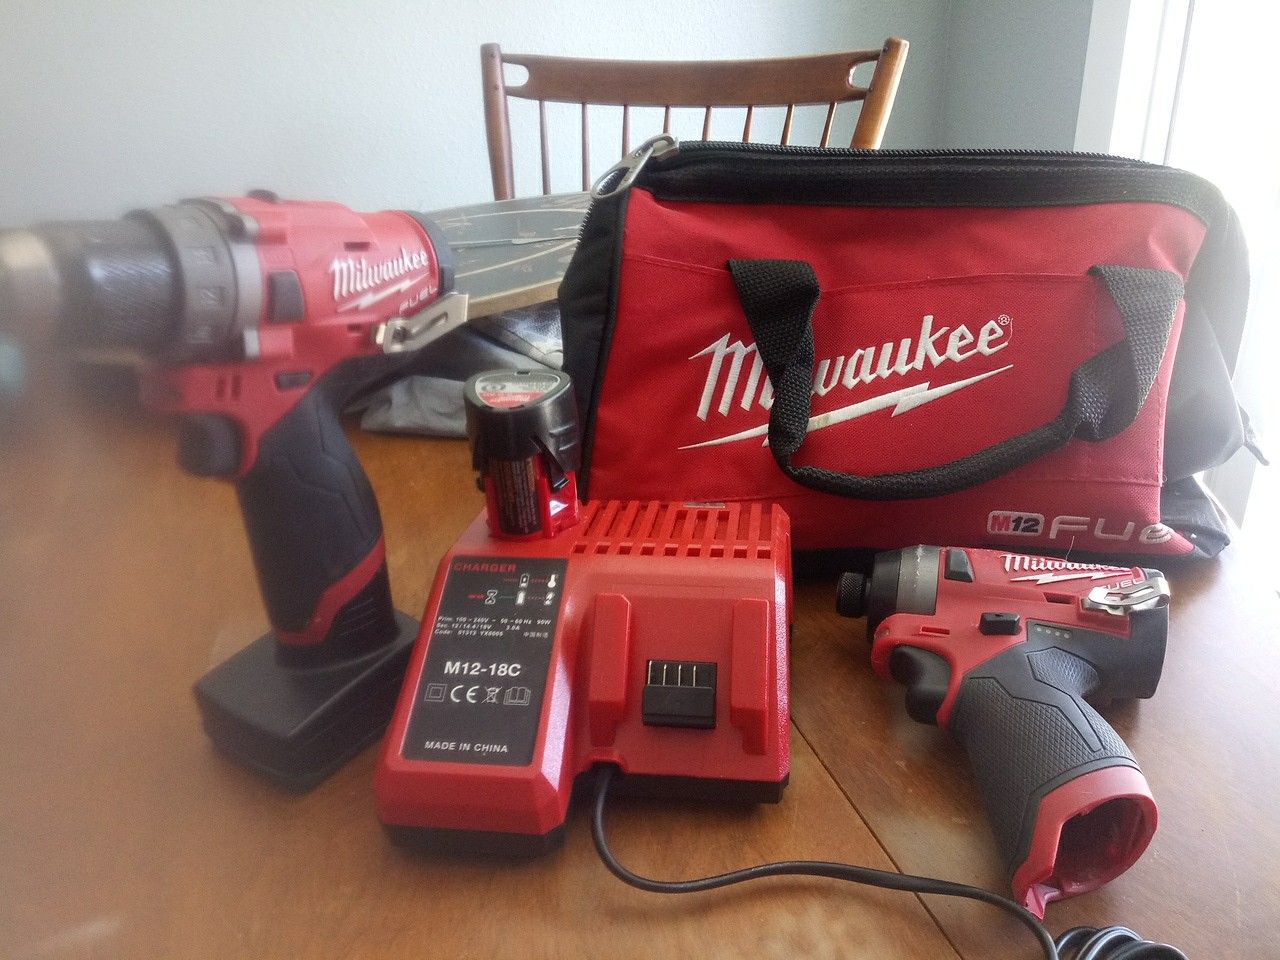 2 Milwalkee fuel impact drills 1 Milwaukee Hackzall with 1 tool bag